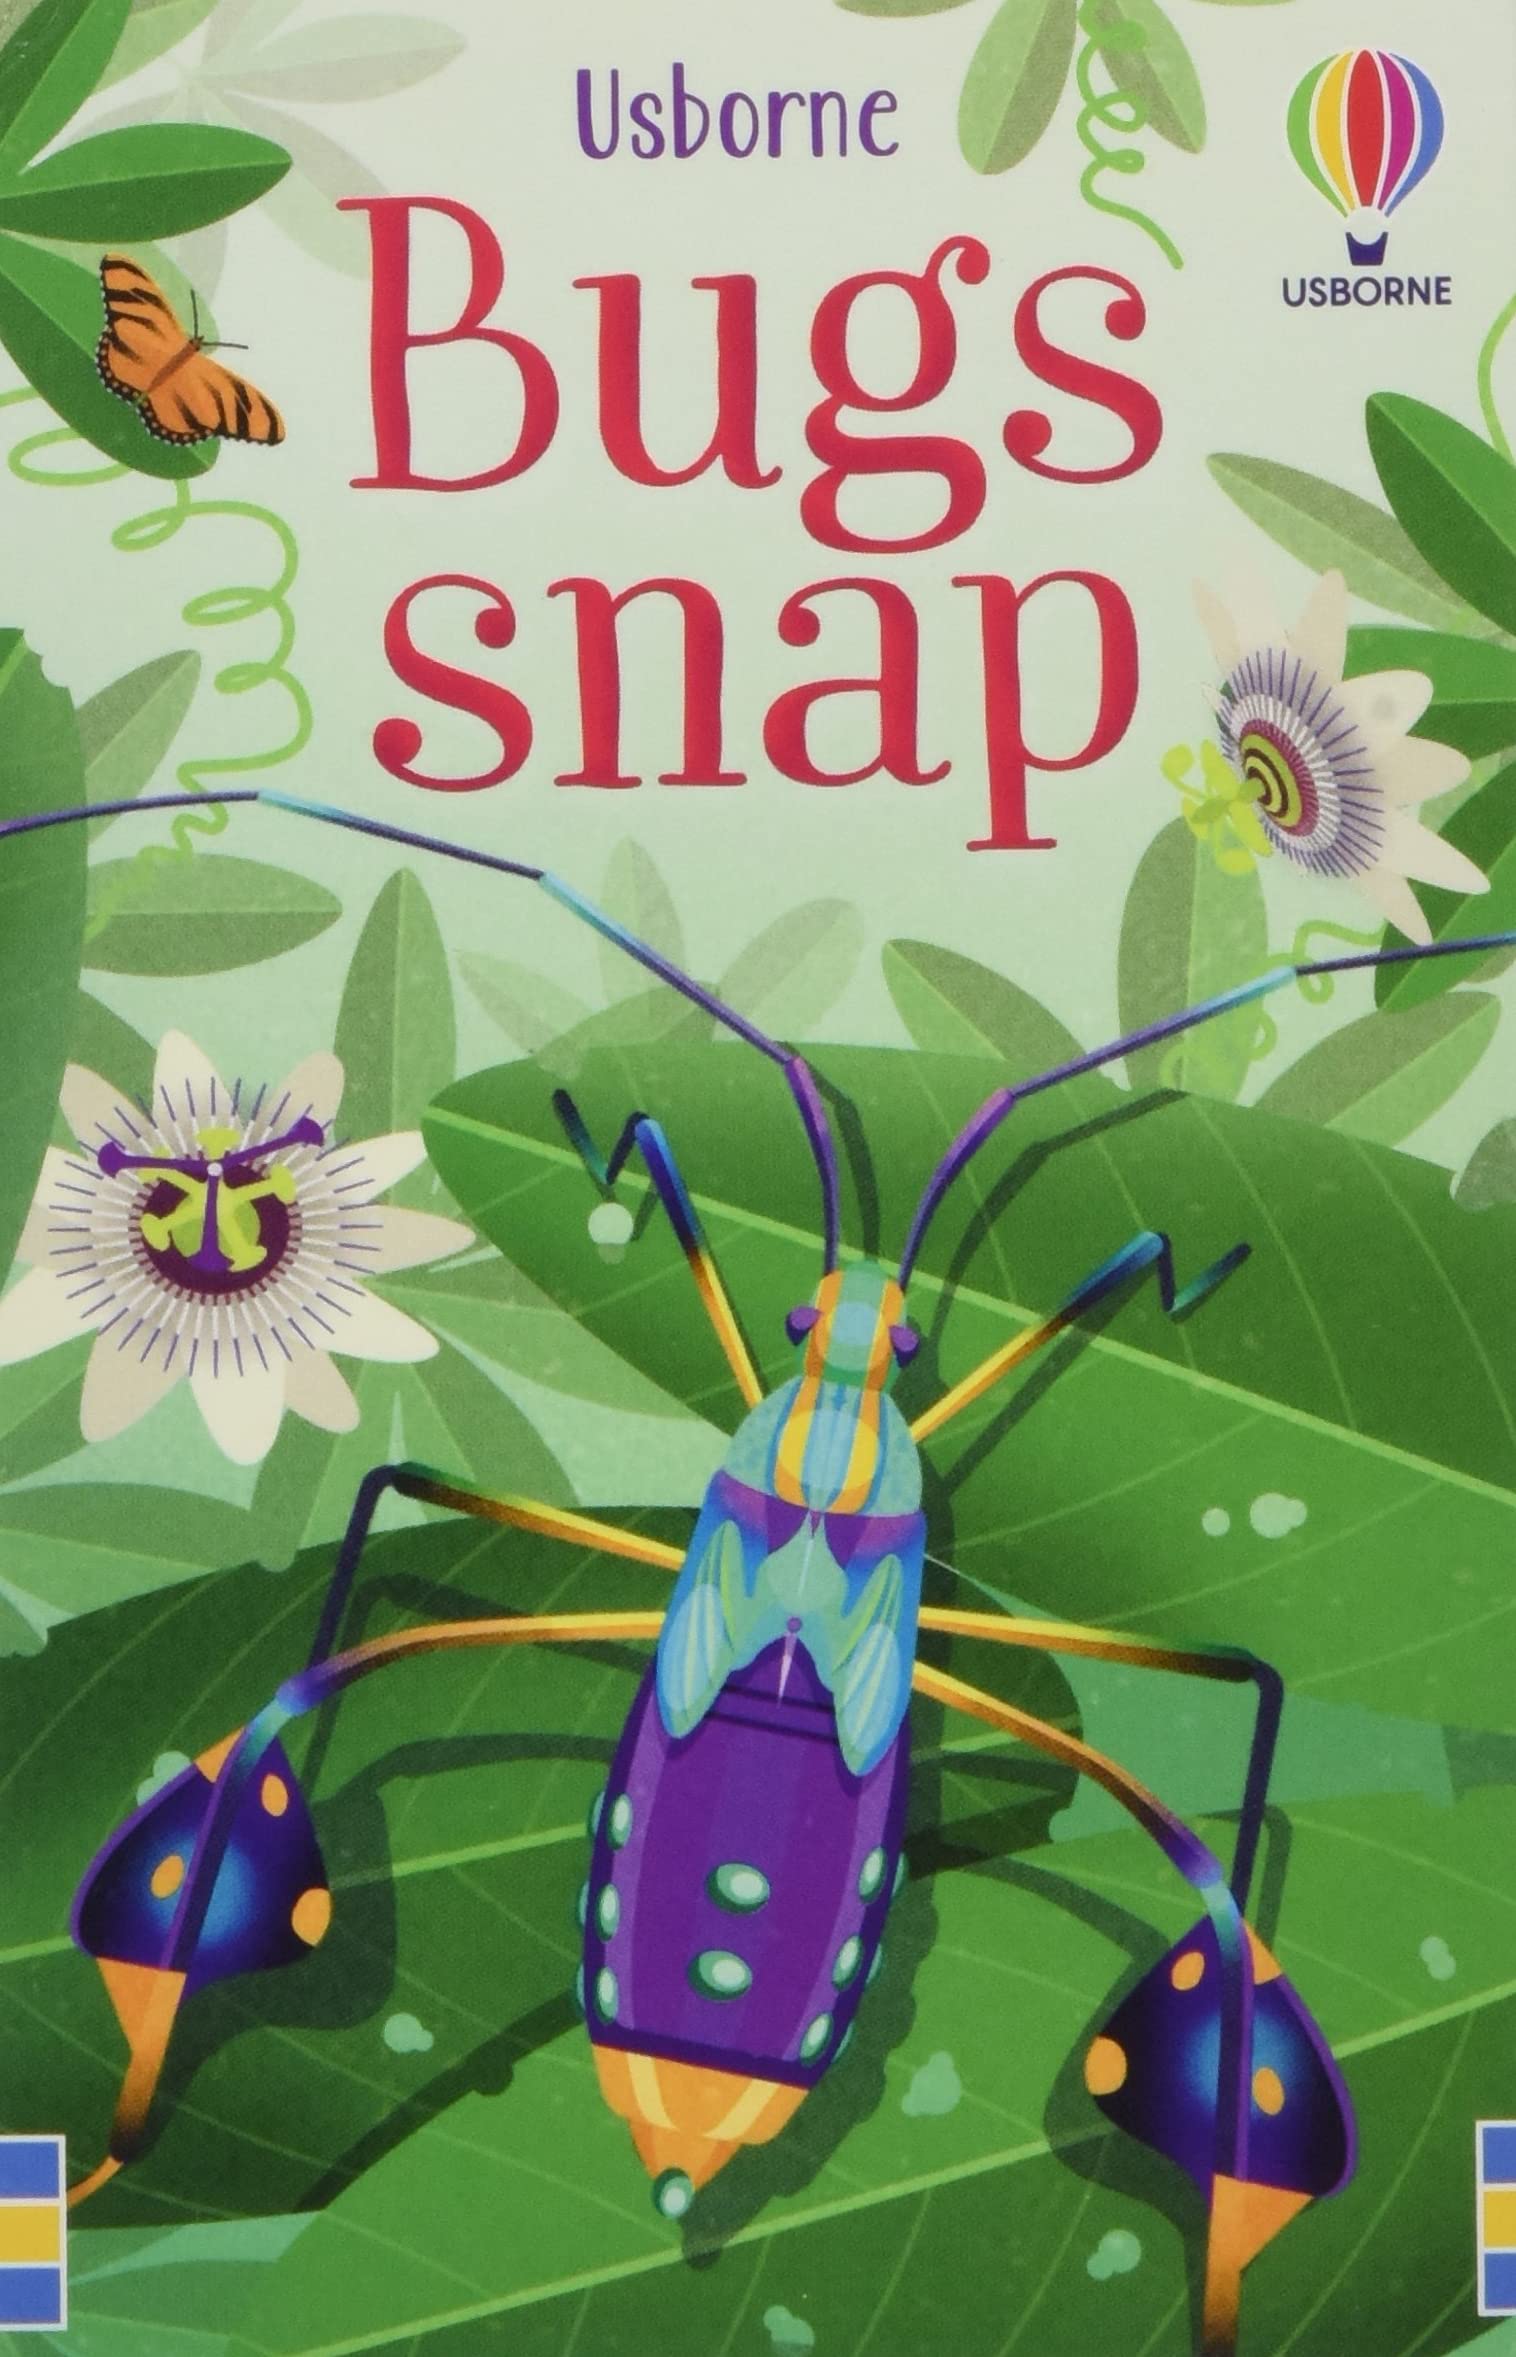 Bugs Snap